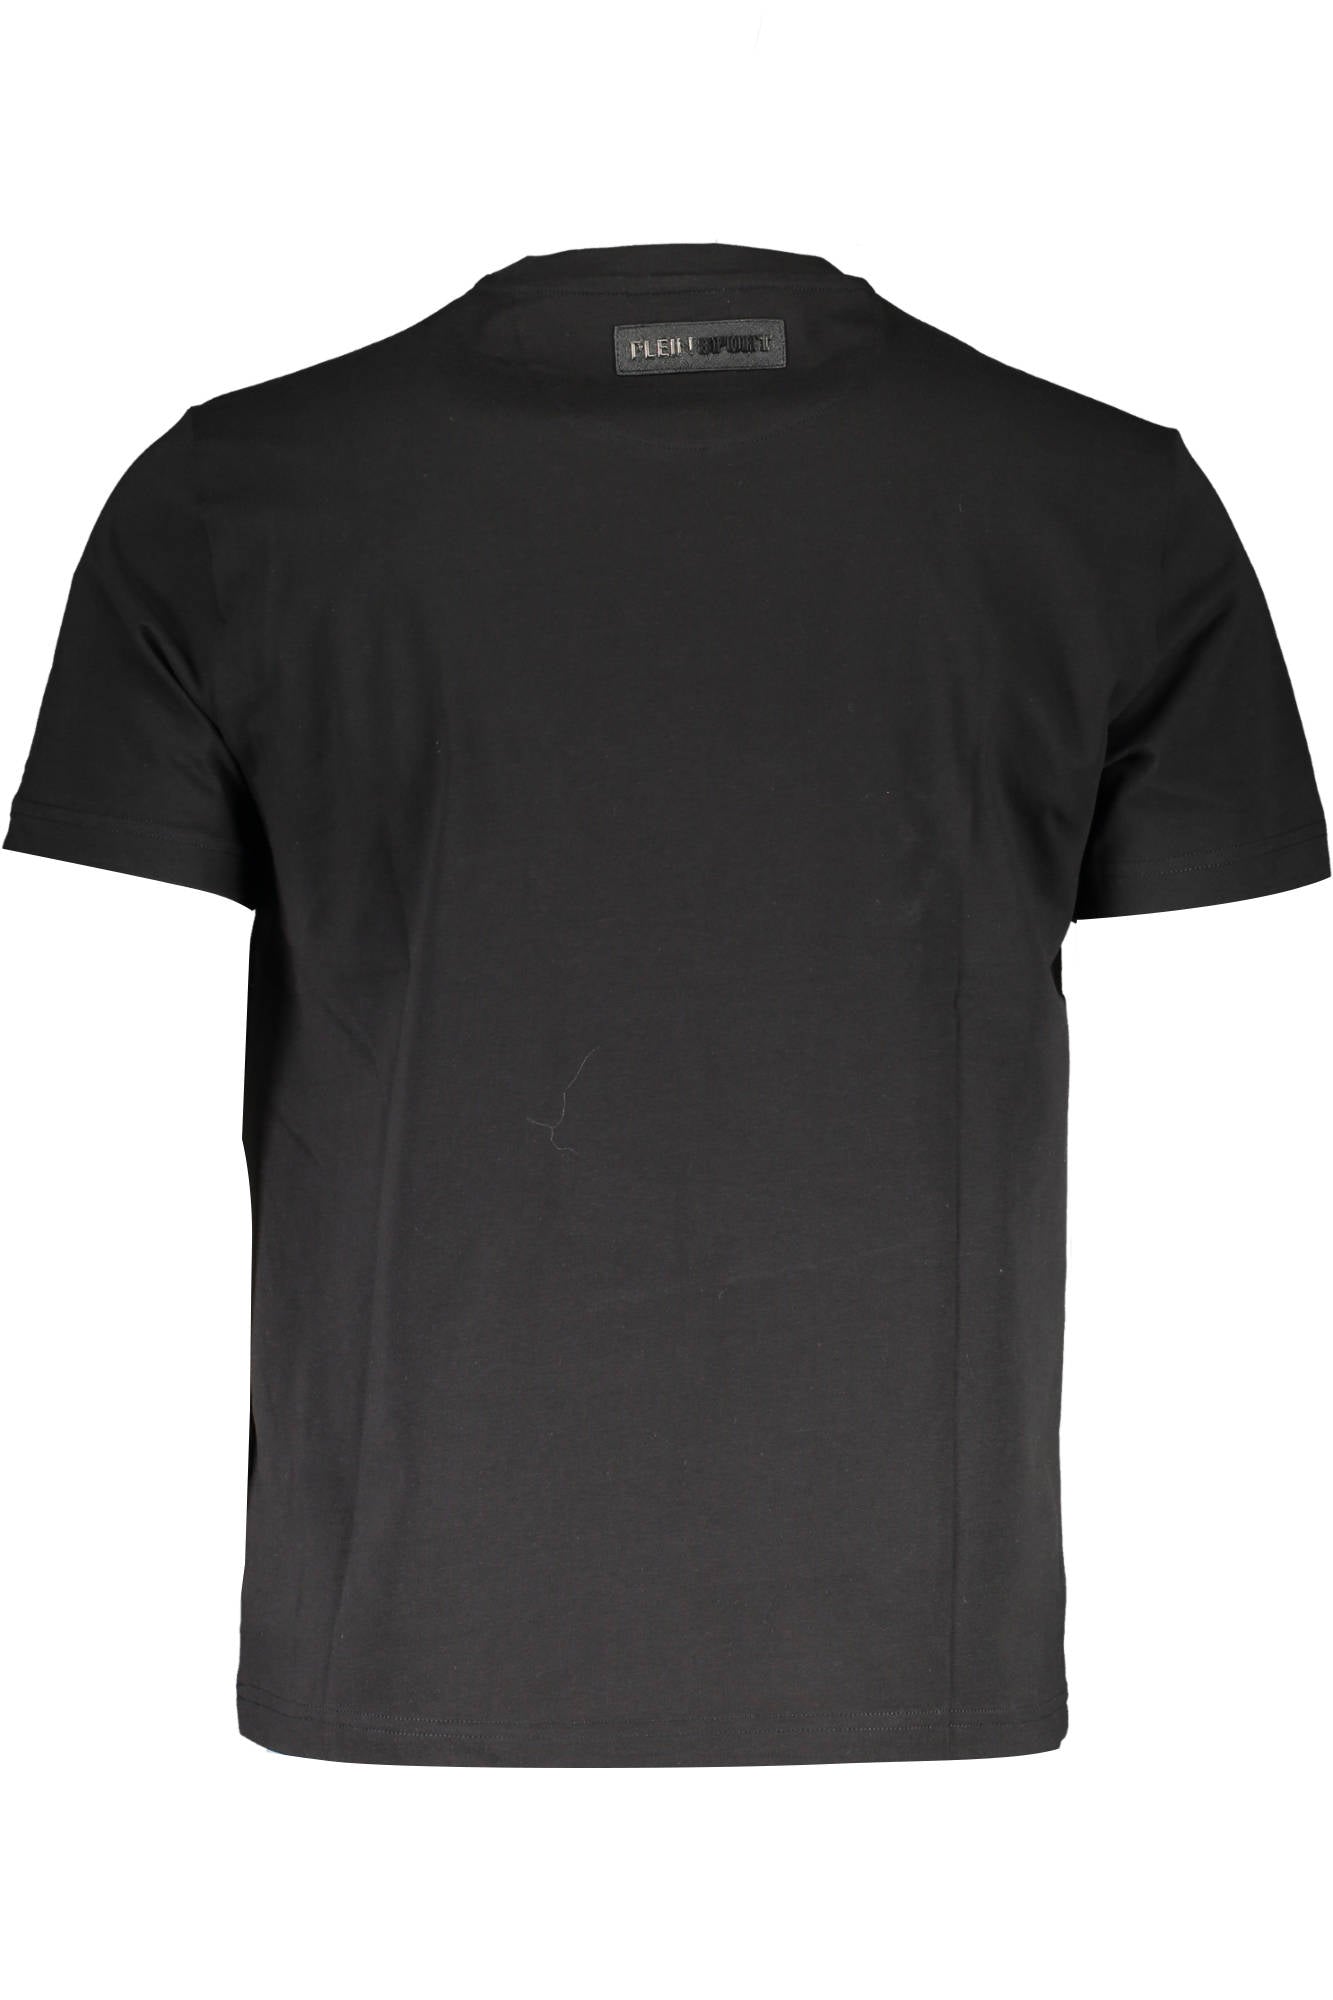 Plein Sport Black T-Shirt - Fizigo